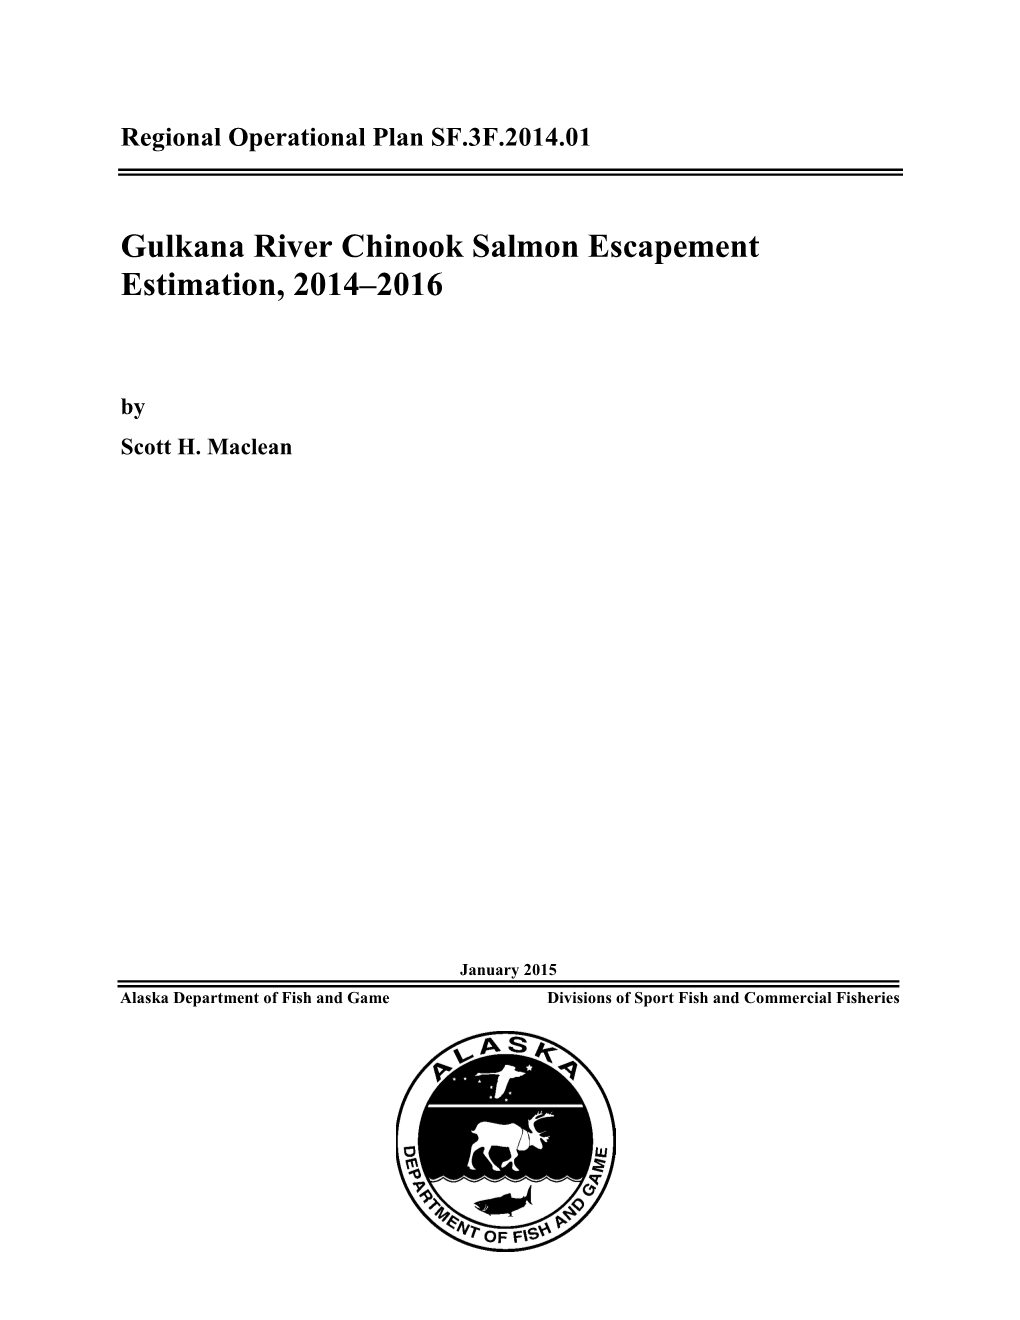 Gulkana River Chinook Salmon Escapement Estimation, 2014-2016. Alaska Department of Fish and Game, Regional Operational Plan ROP.SF.3F.2014.01, Fairbanks